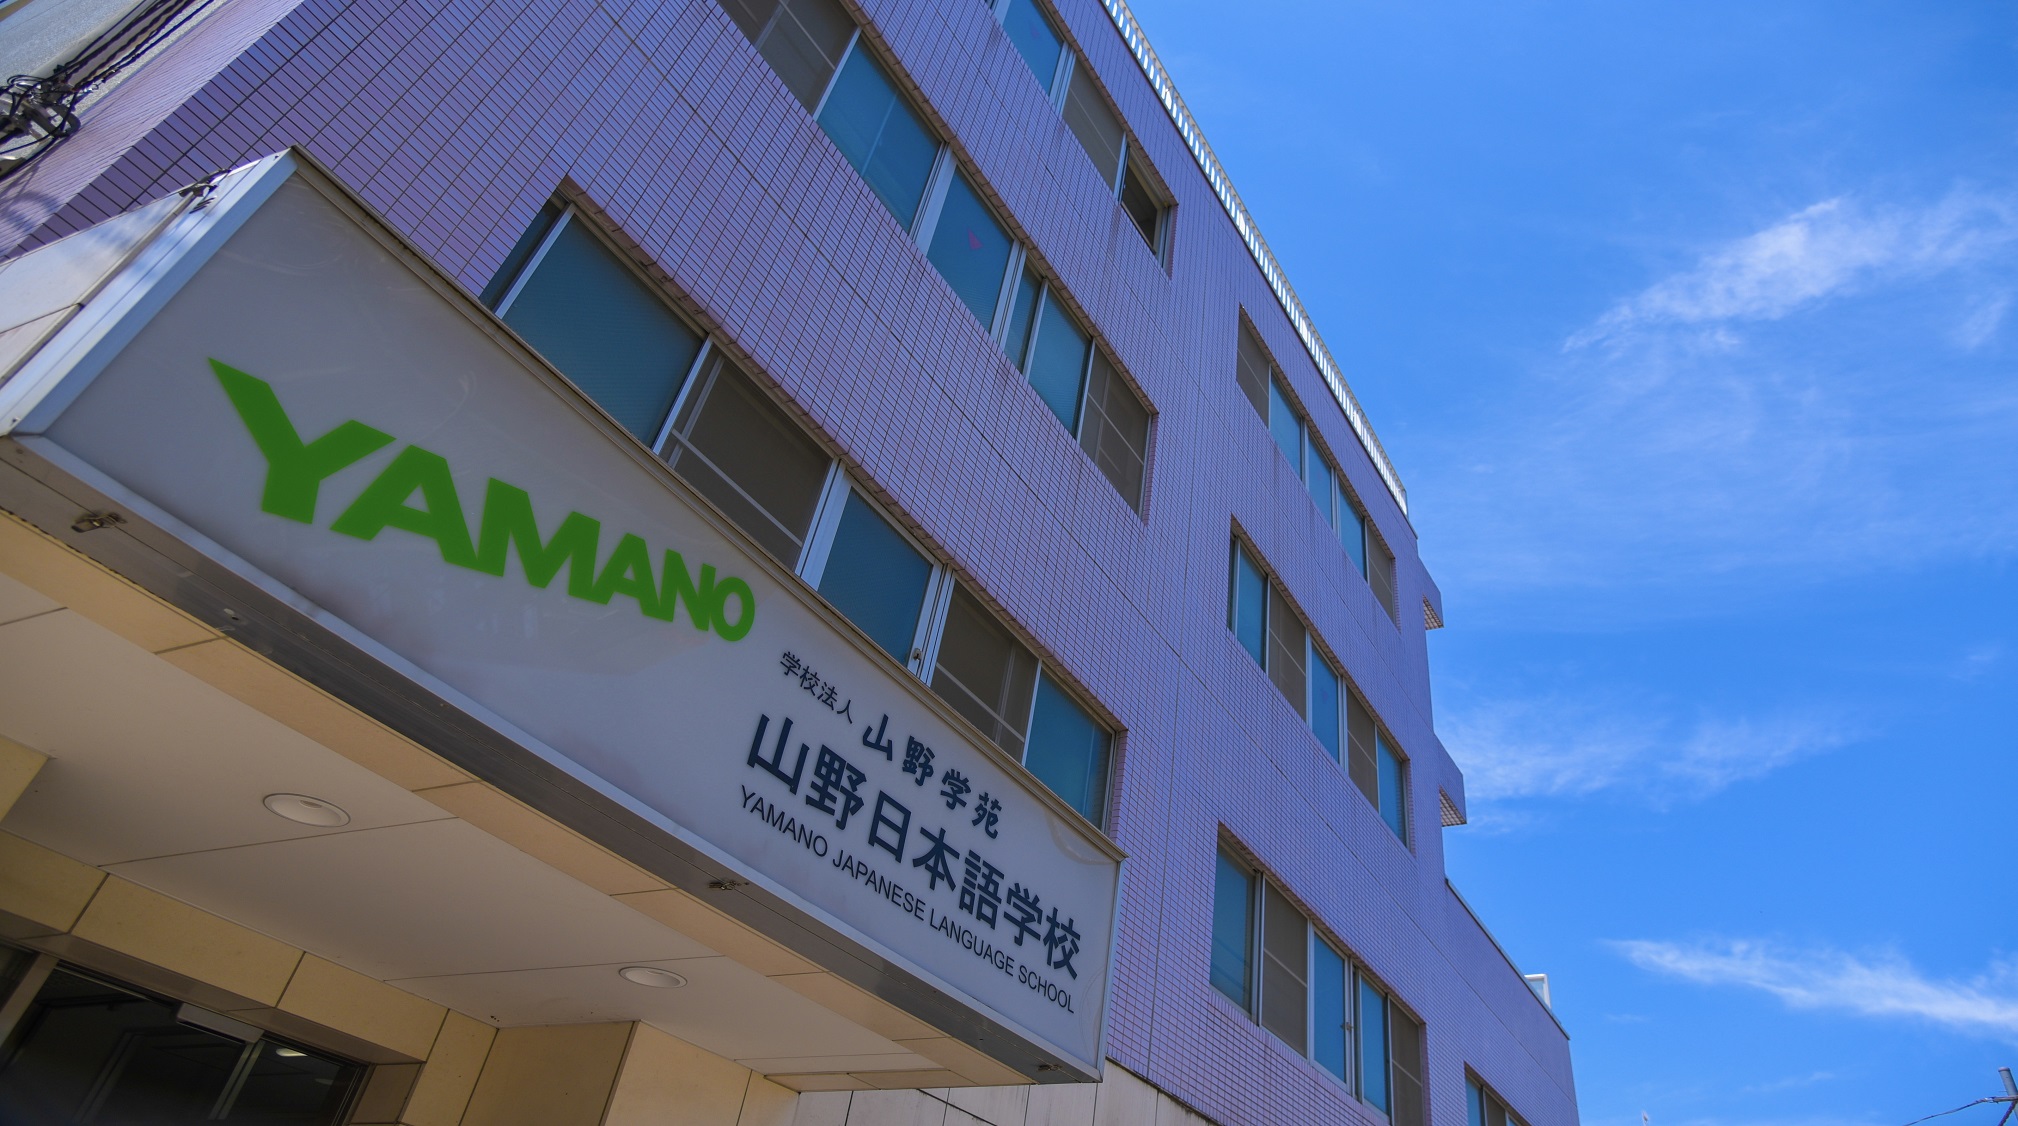 山野日本語学校 Yamano Japanese Language School